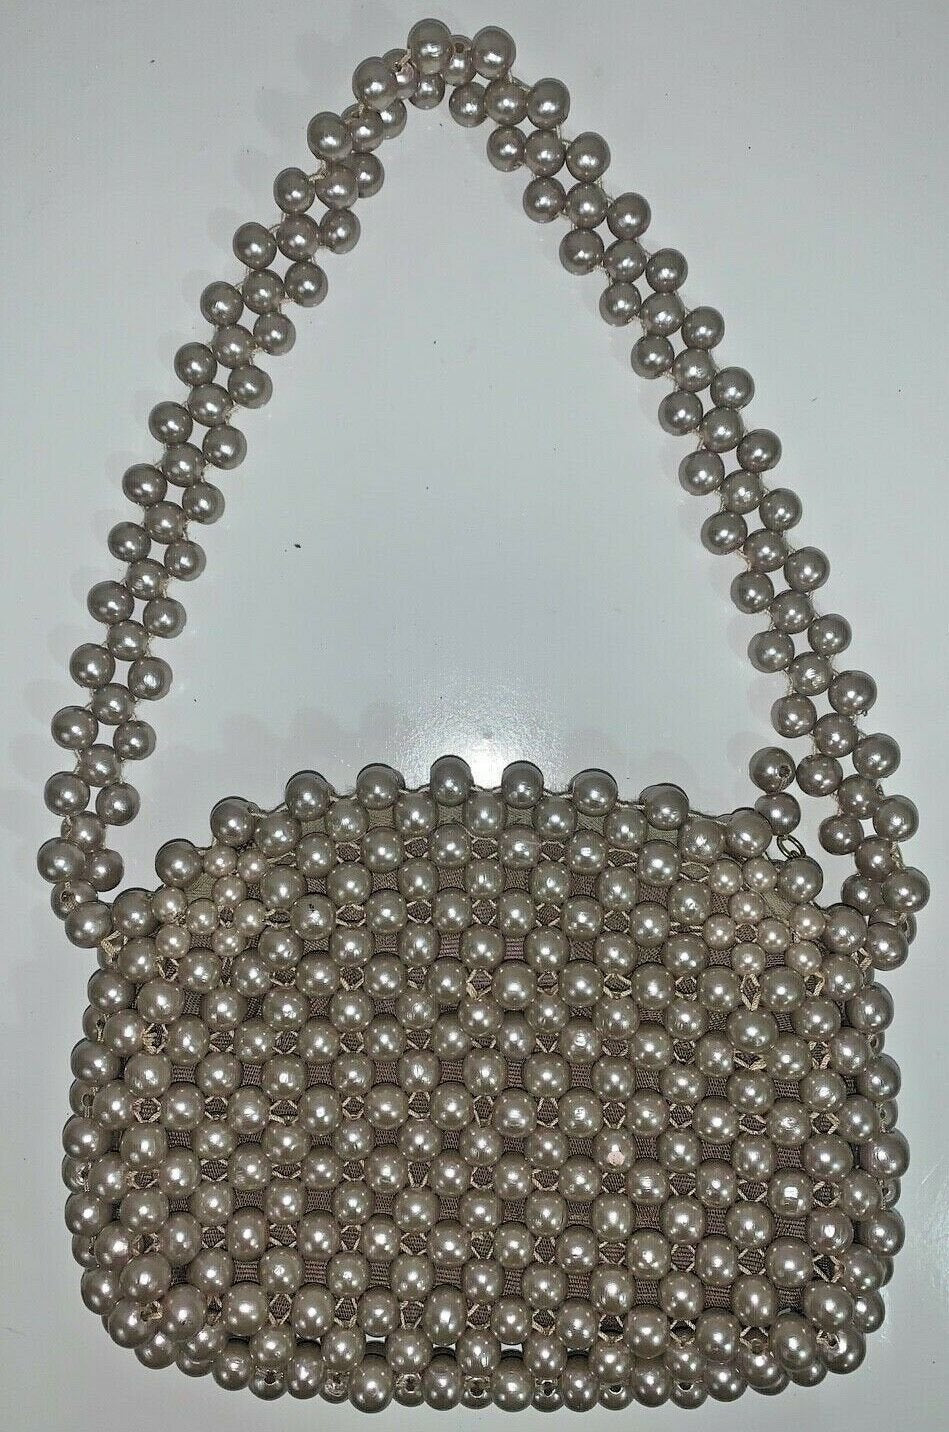 Vintage Cream Wooden Pearl Beaded Purse Handbag Made in Japan